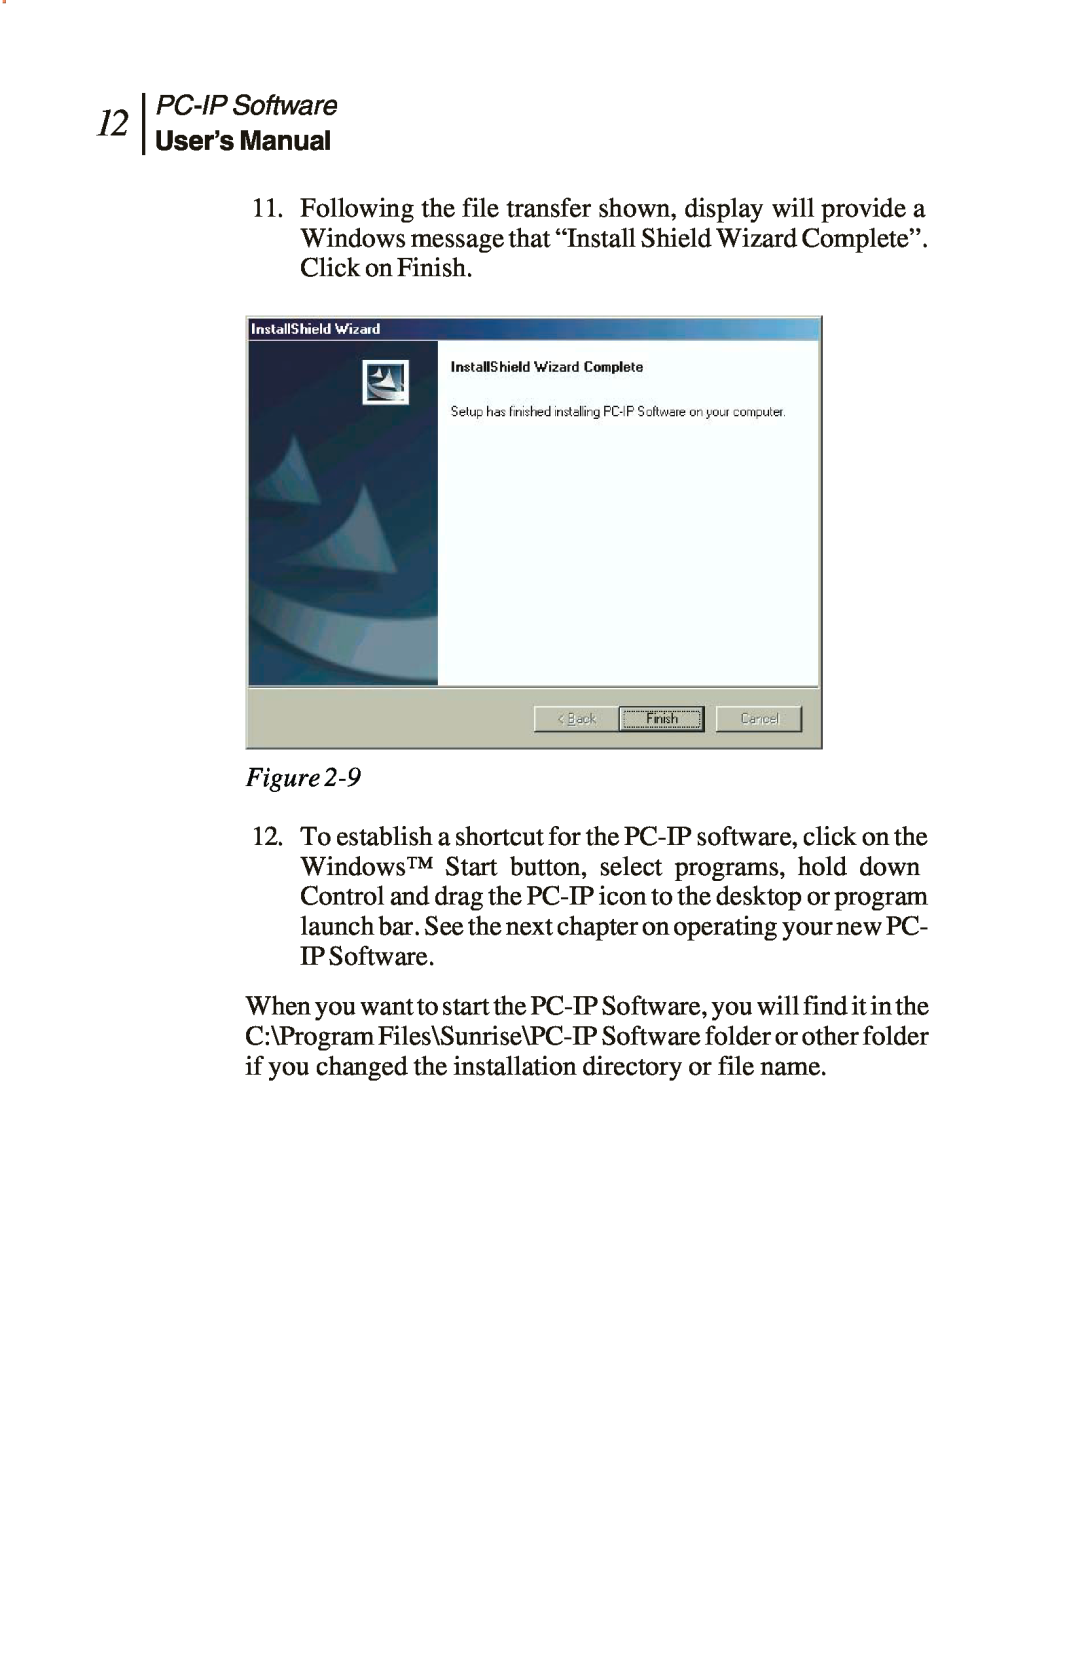 Sunrise Global CM100 IP, CM250 IP, and CM500 IP manual PC-IPSoftware, User’s Manual, Figure 